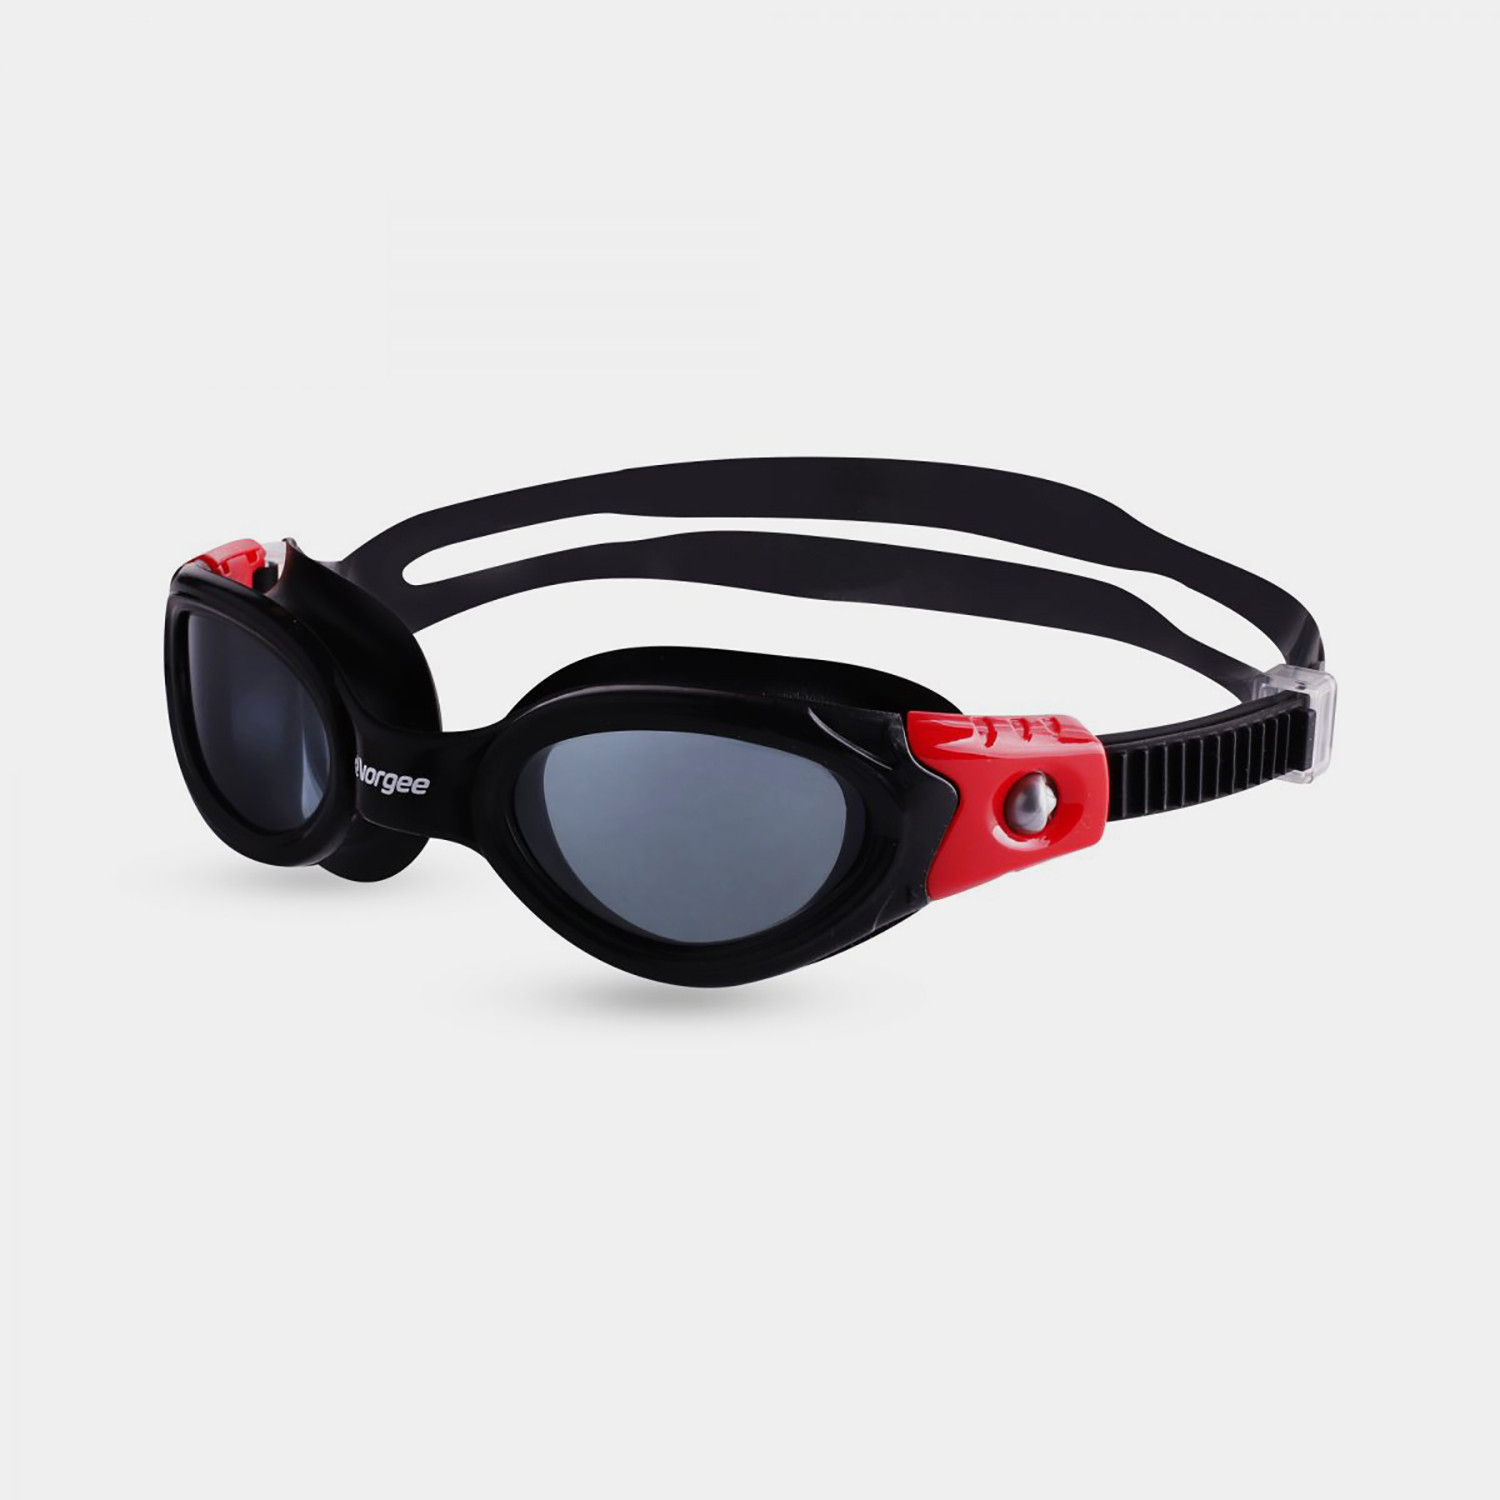 Vorgee Vortech Narrow Fit Tinted Unisex Goggles (9000053565_001)